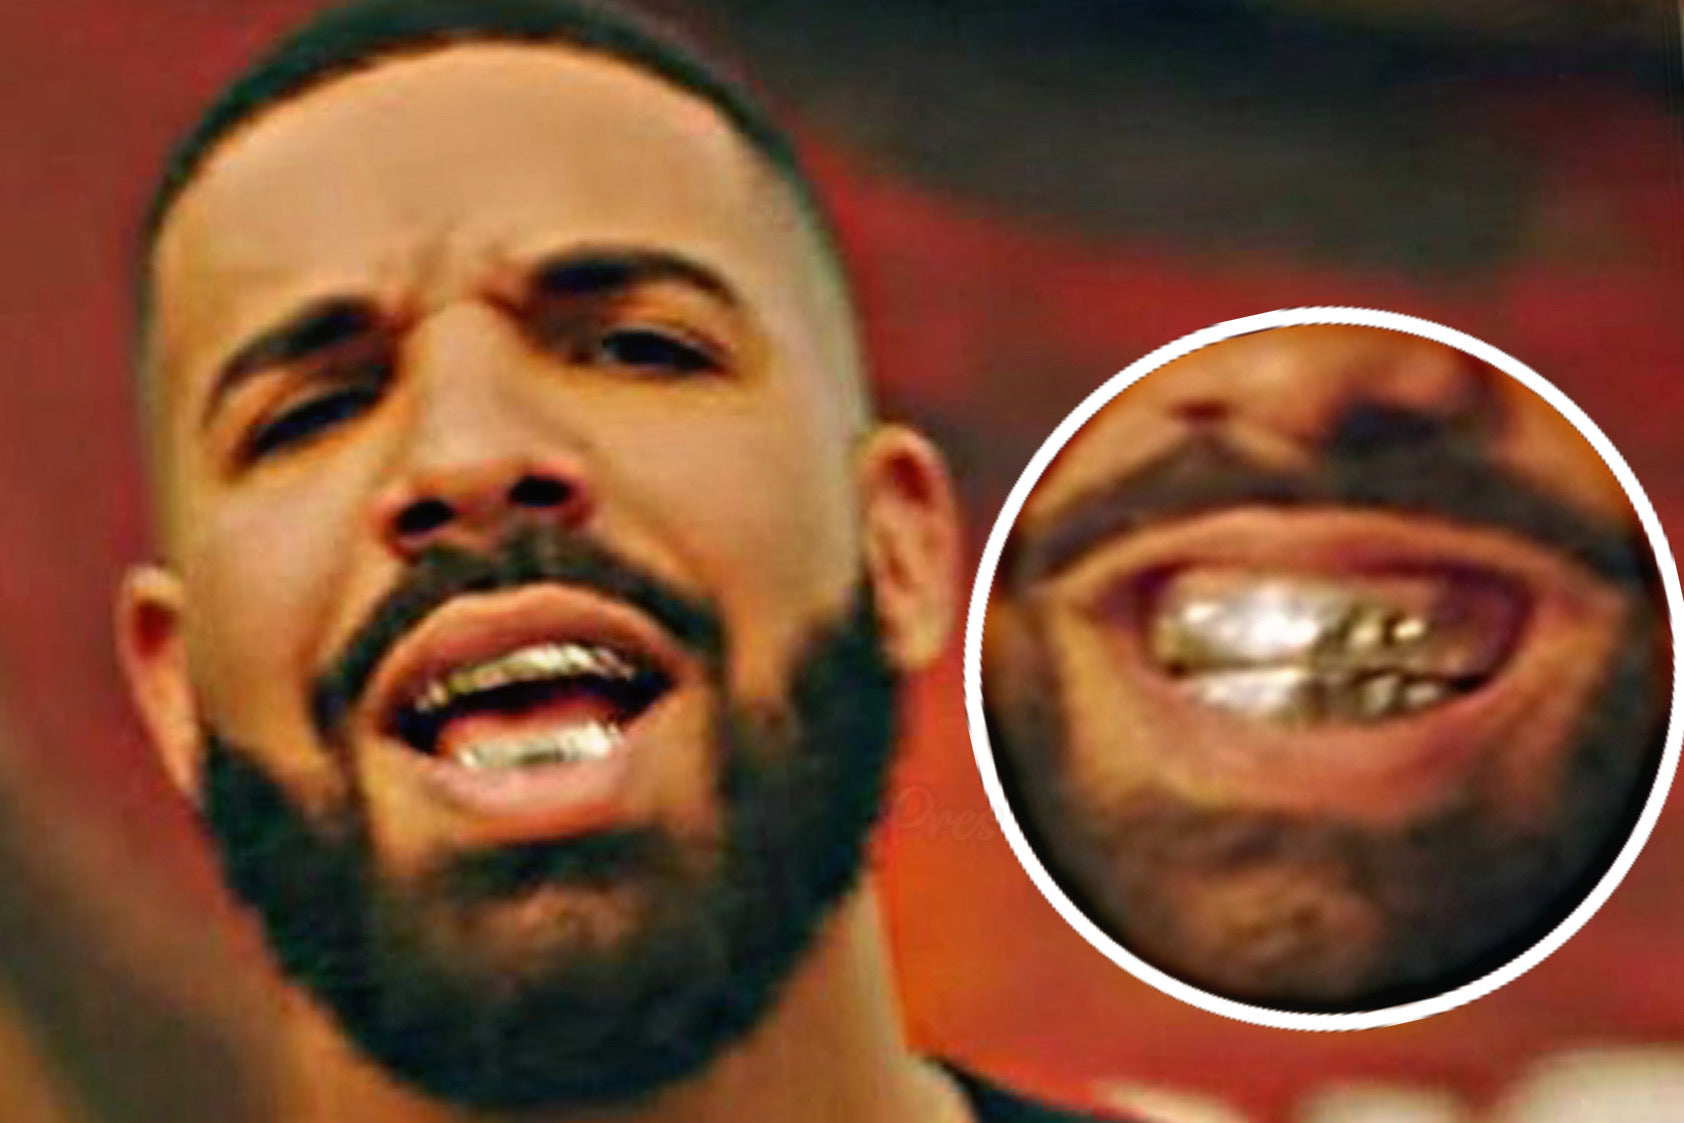 Drake Spends $14k on Grillz for "In My Feelings" Music Video